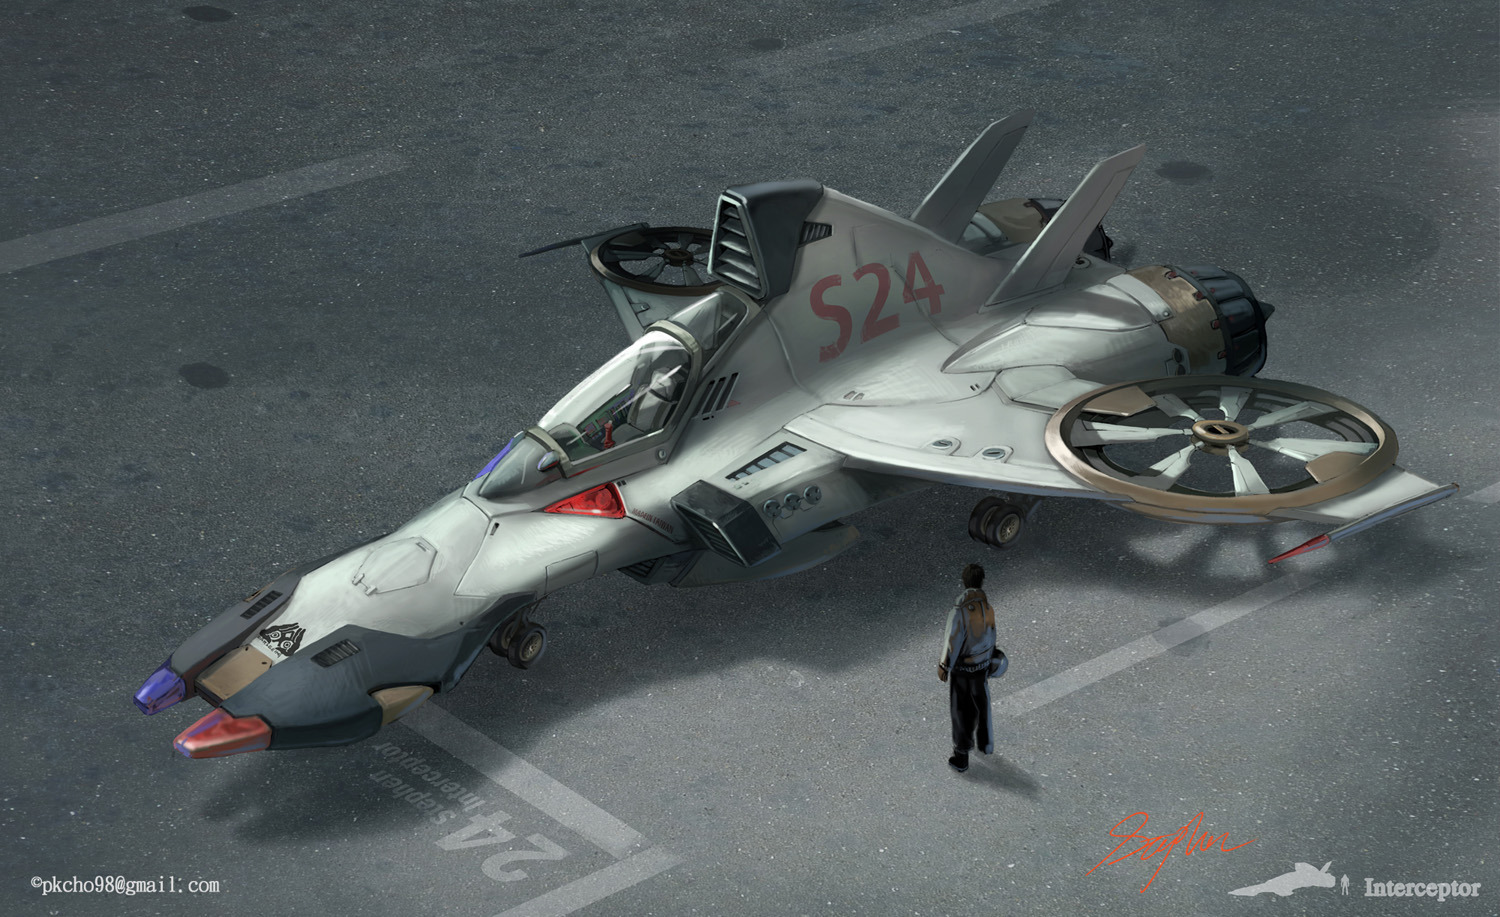 Sci Fi Aircraft Picture by Stephen Tsai